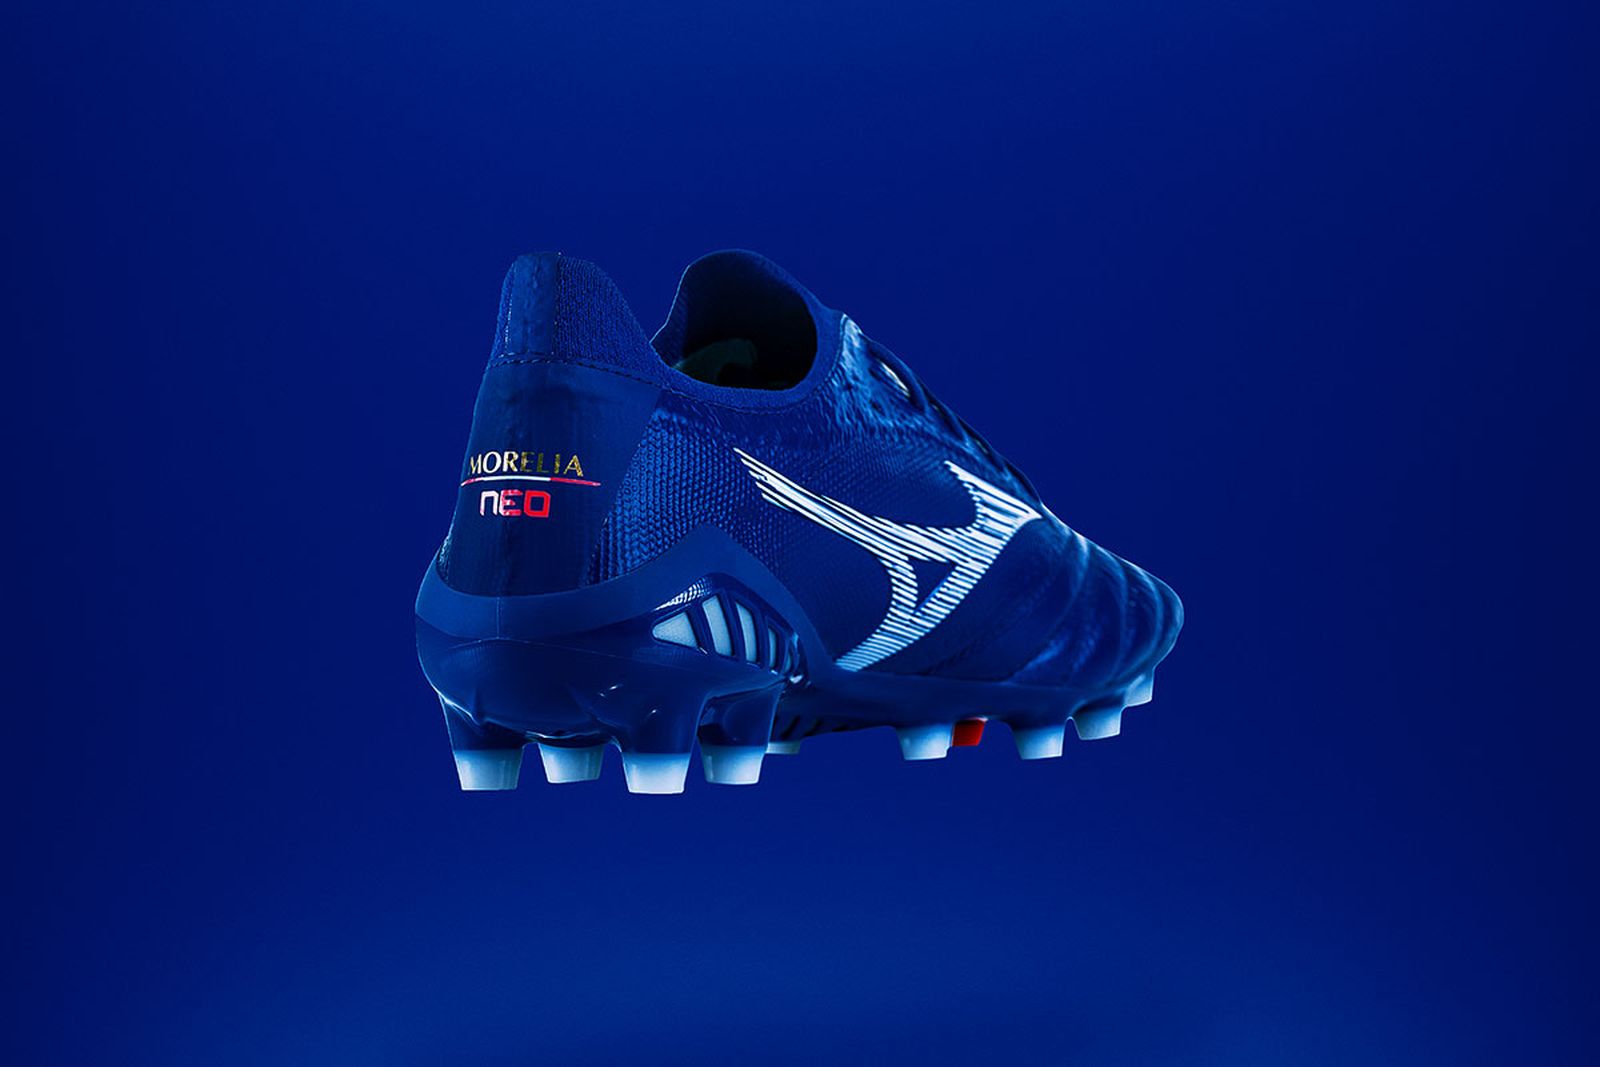 Mizuno Morelia Neo 3 blue kangaroo leather football boot product shot heel view